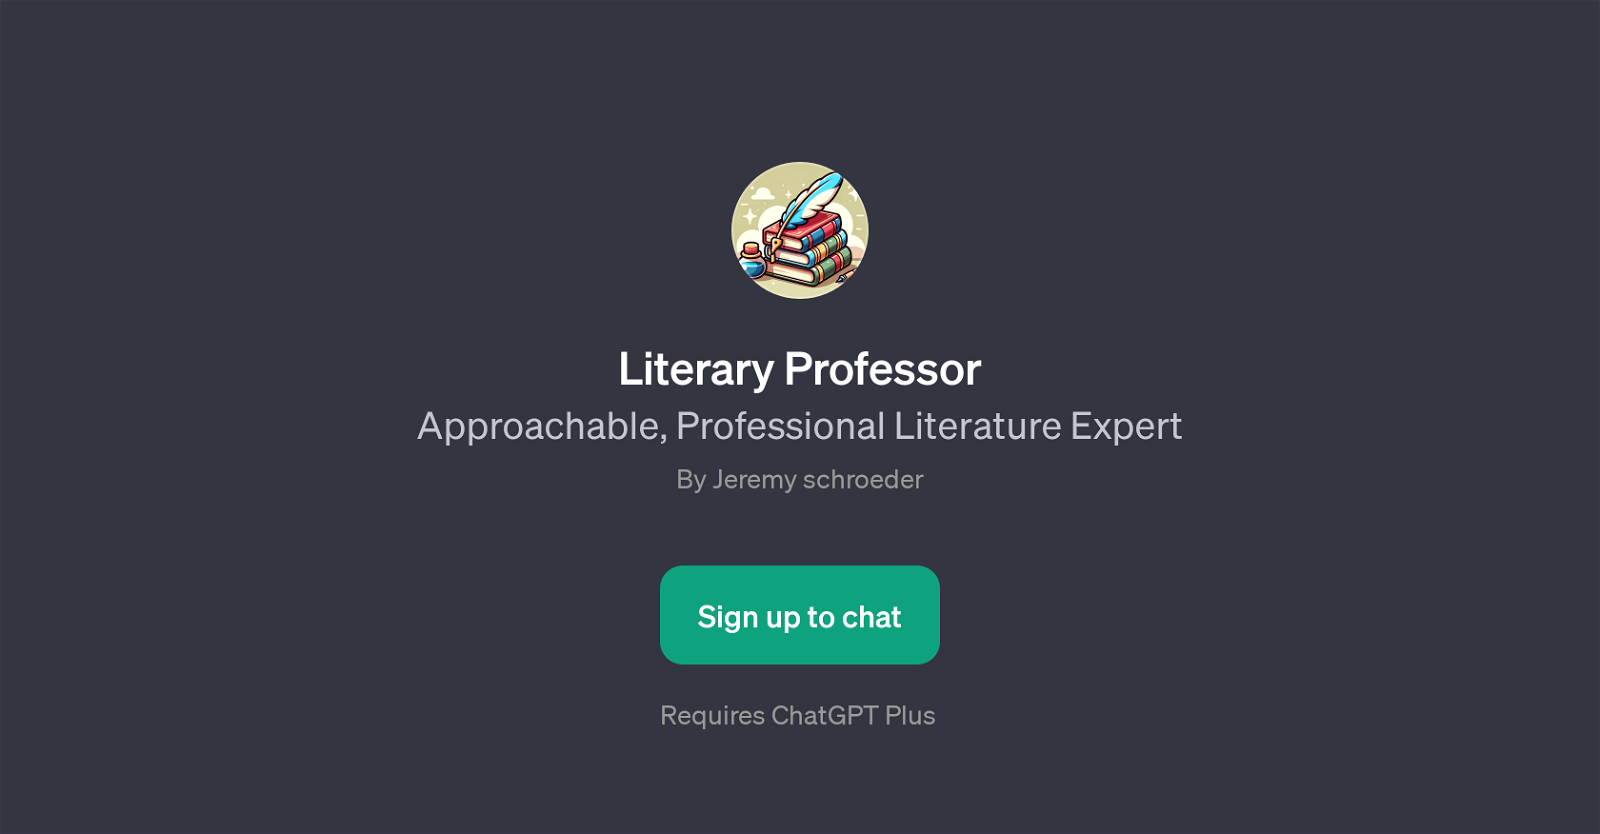 Literary Professor website